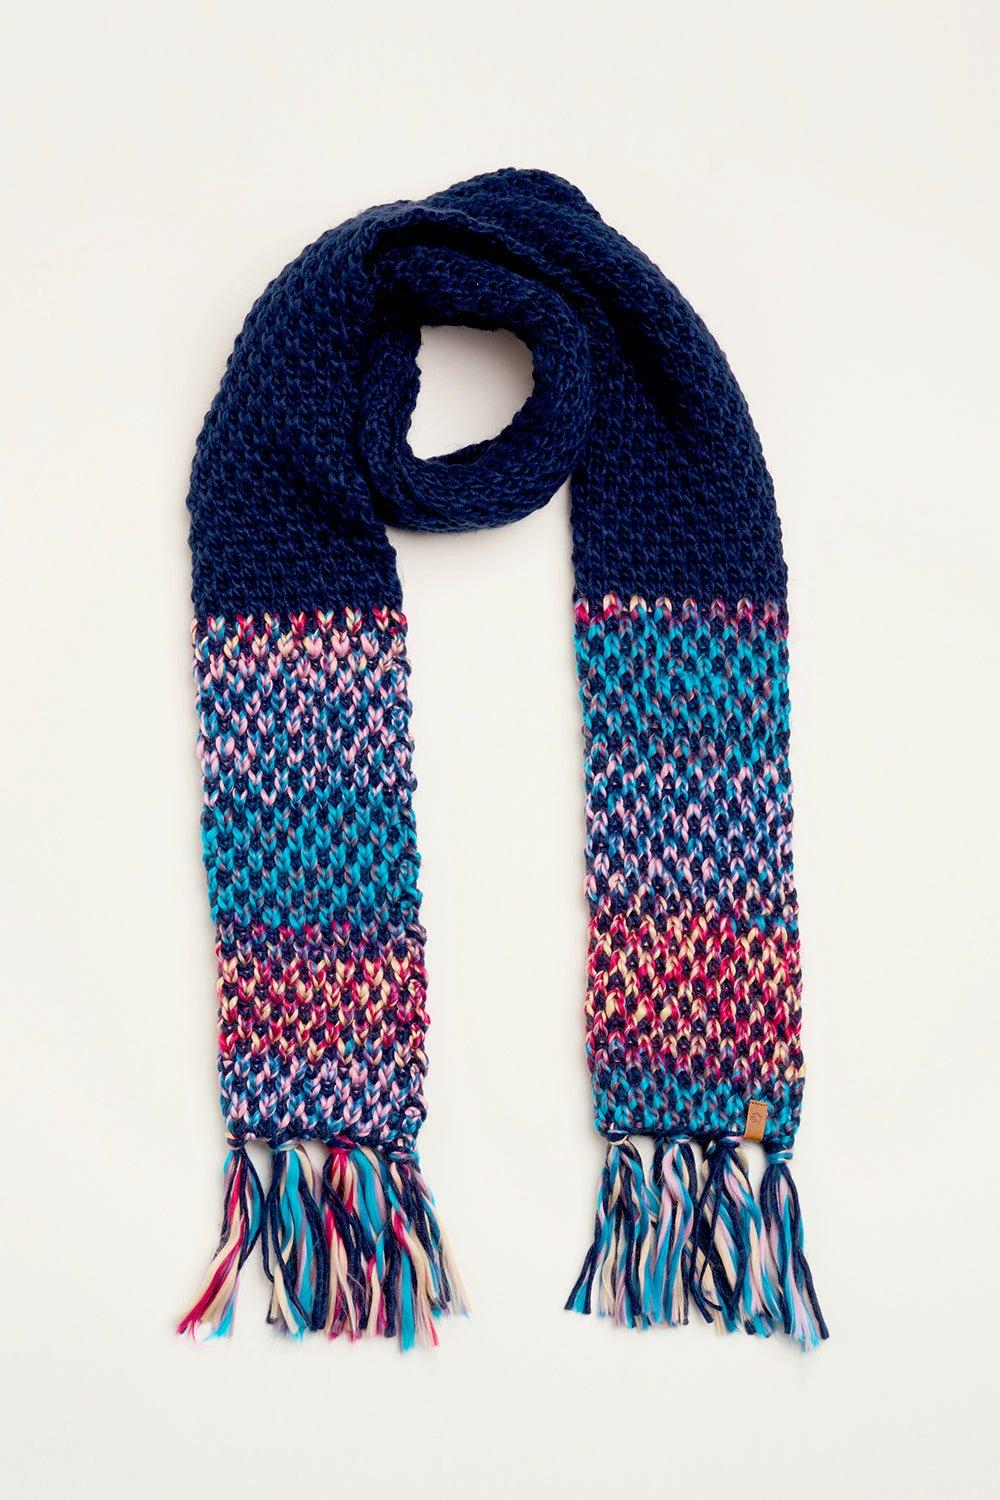 Вязаный шарф Space Dye Brakeburn, мультиколор шарф крупной вязки цвет – серый